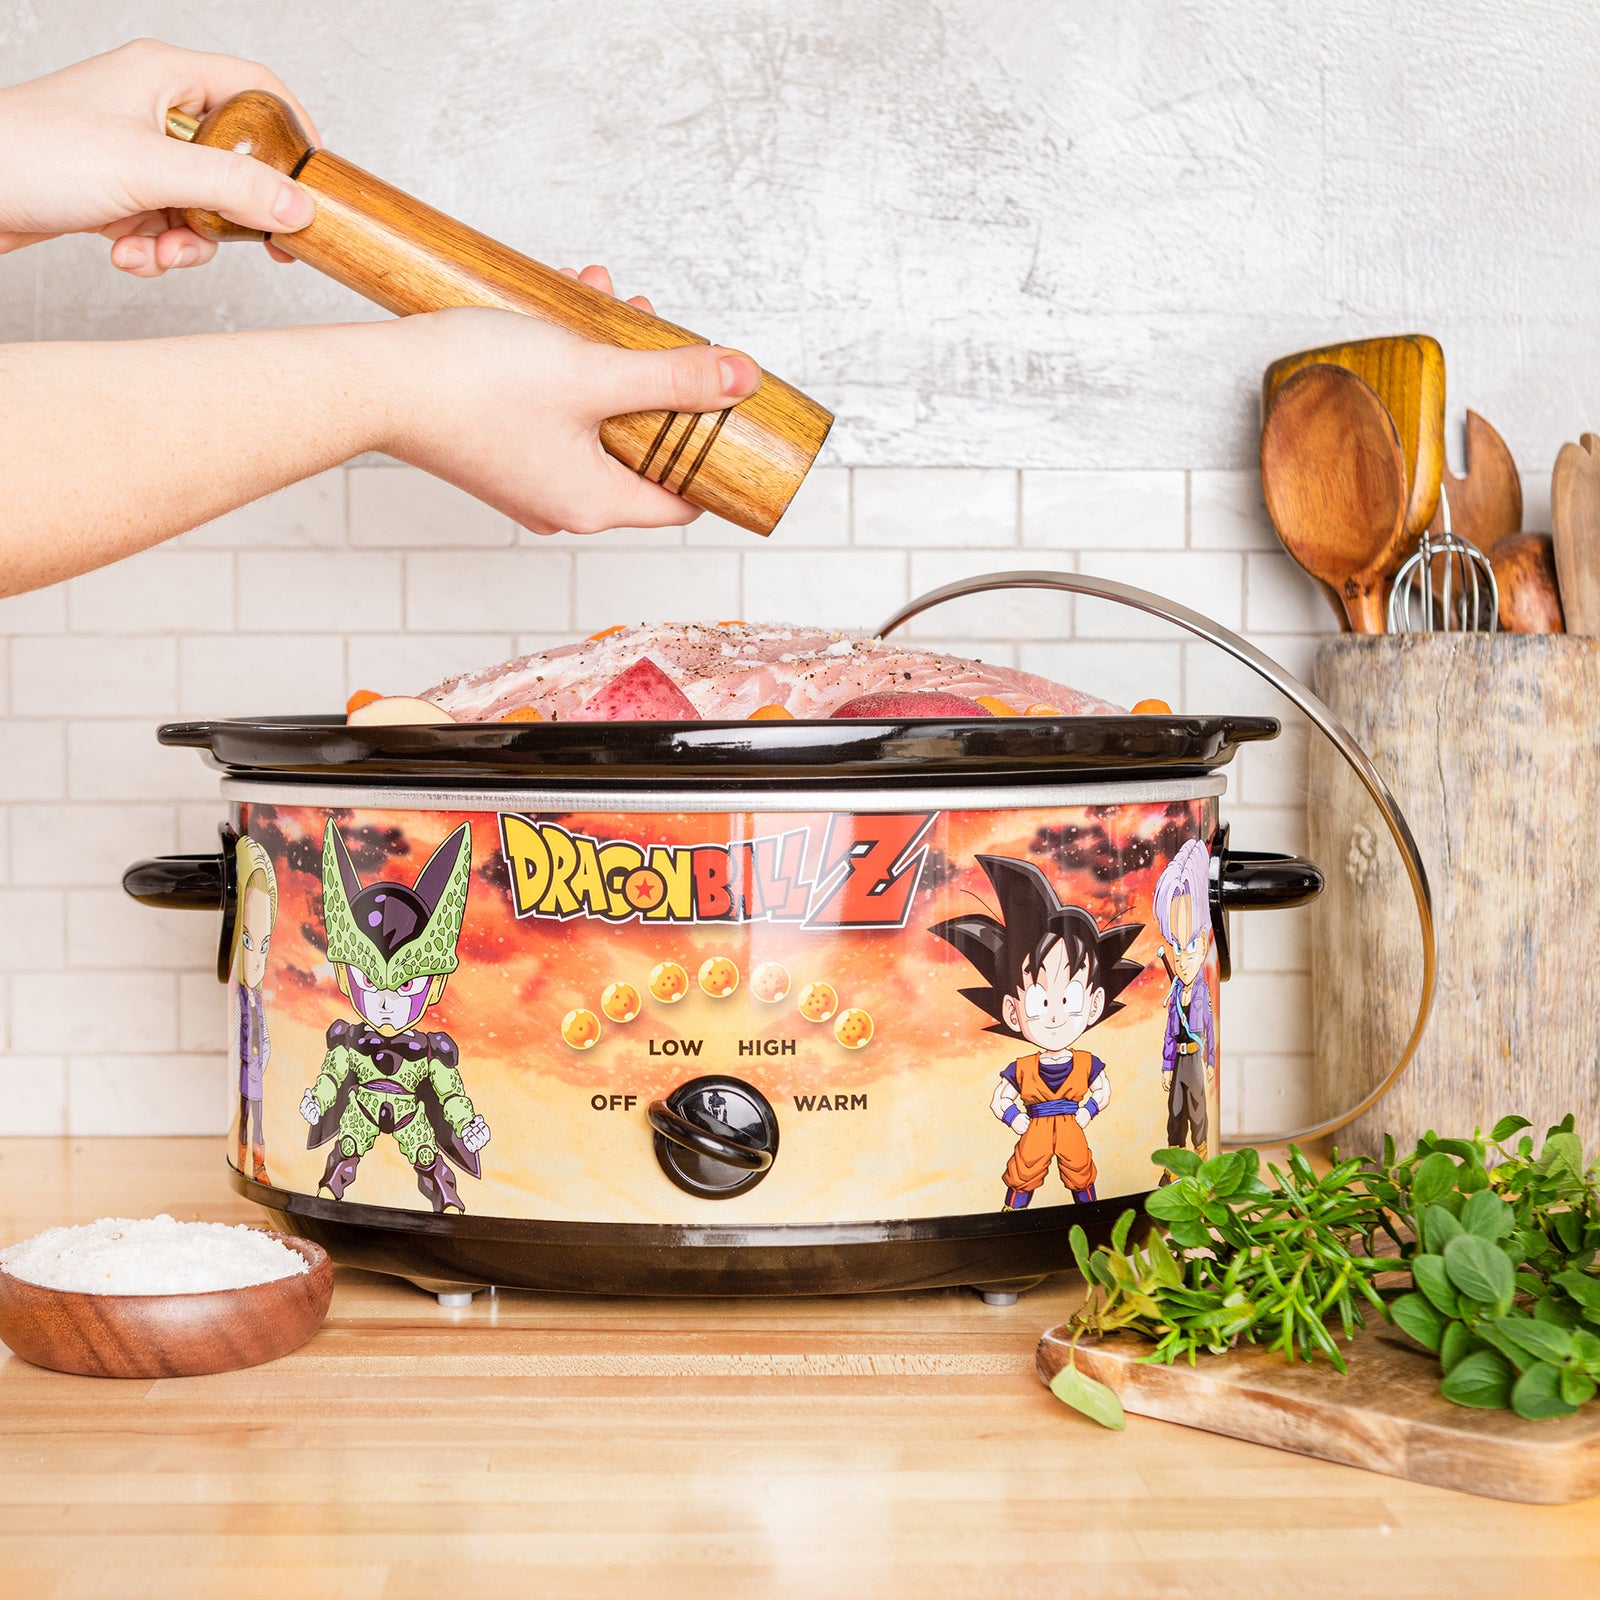 New] Hello Kitty Rice cooker 0.6L Sanrio Lawson Pink Kawaii Anime Limited  Rare | eBay